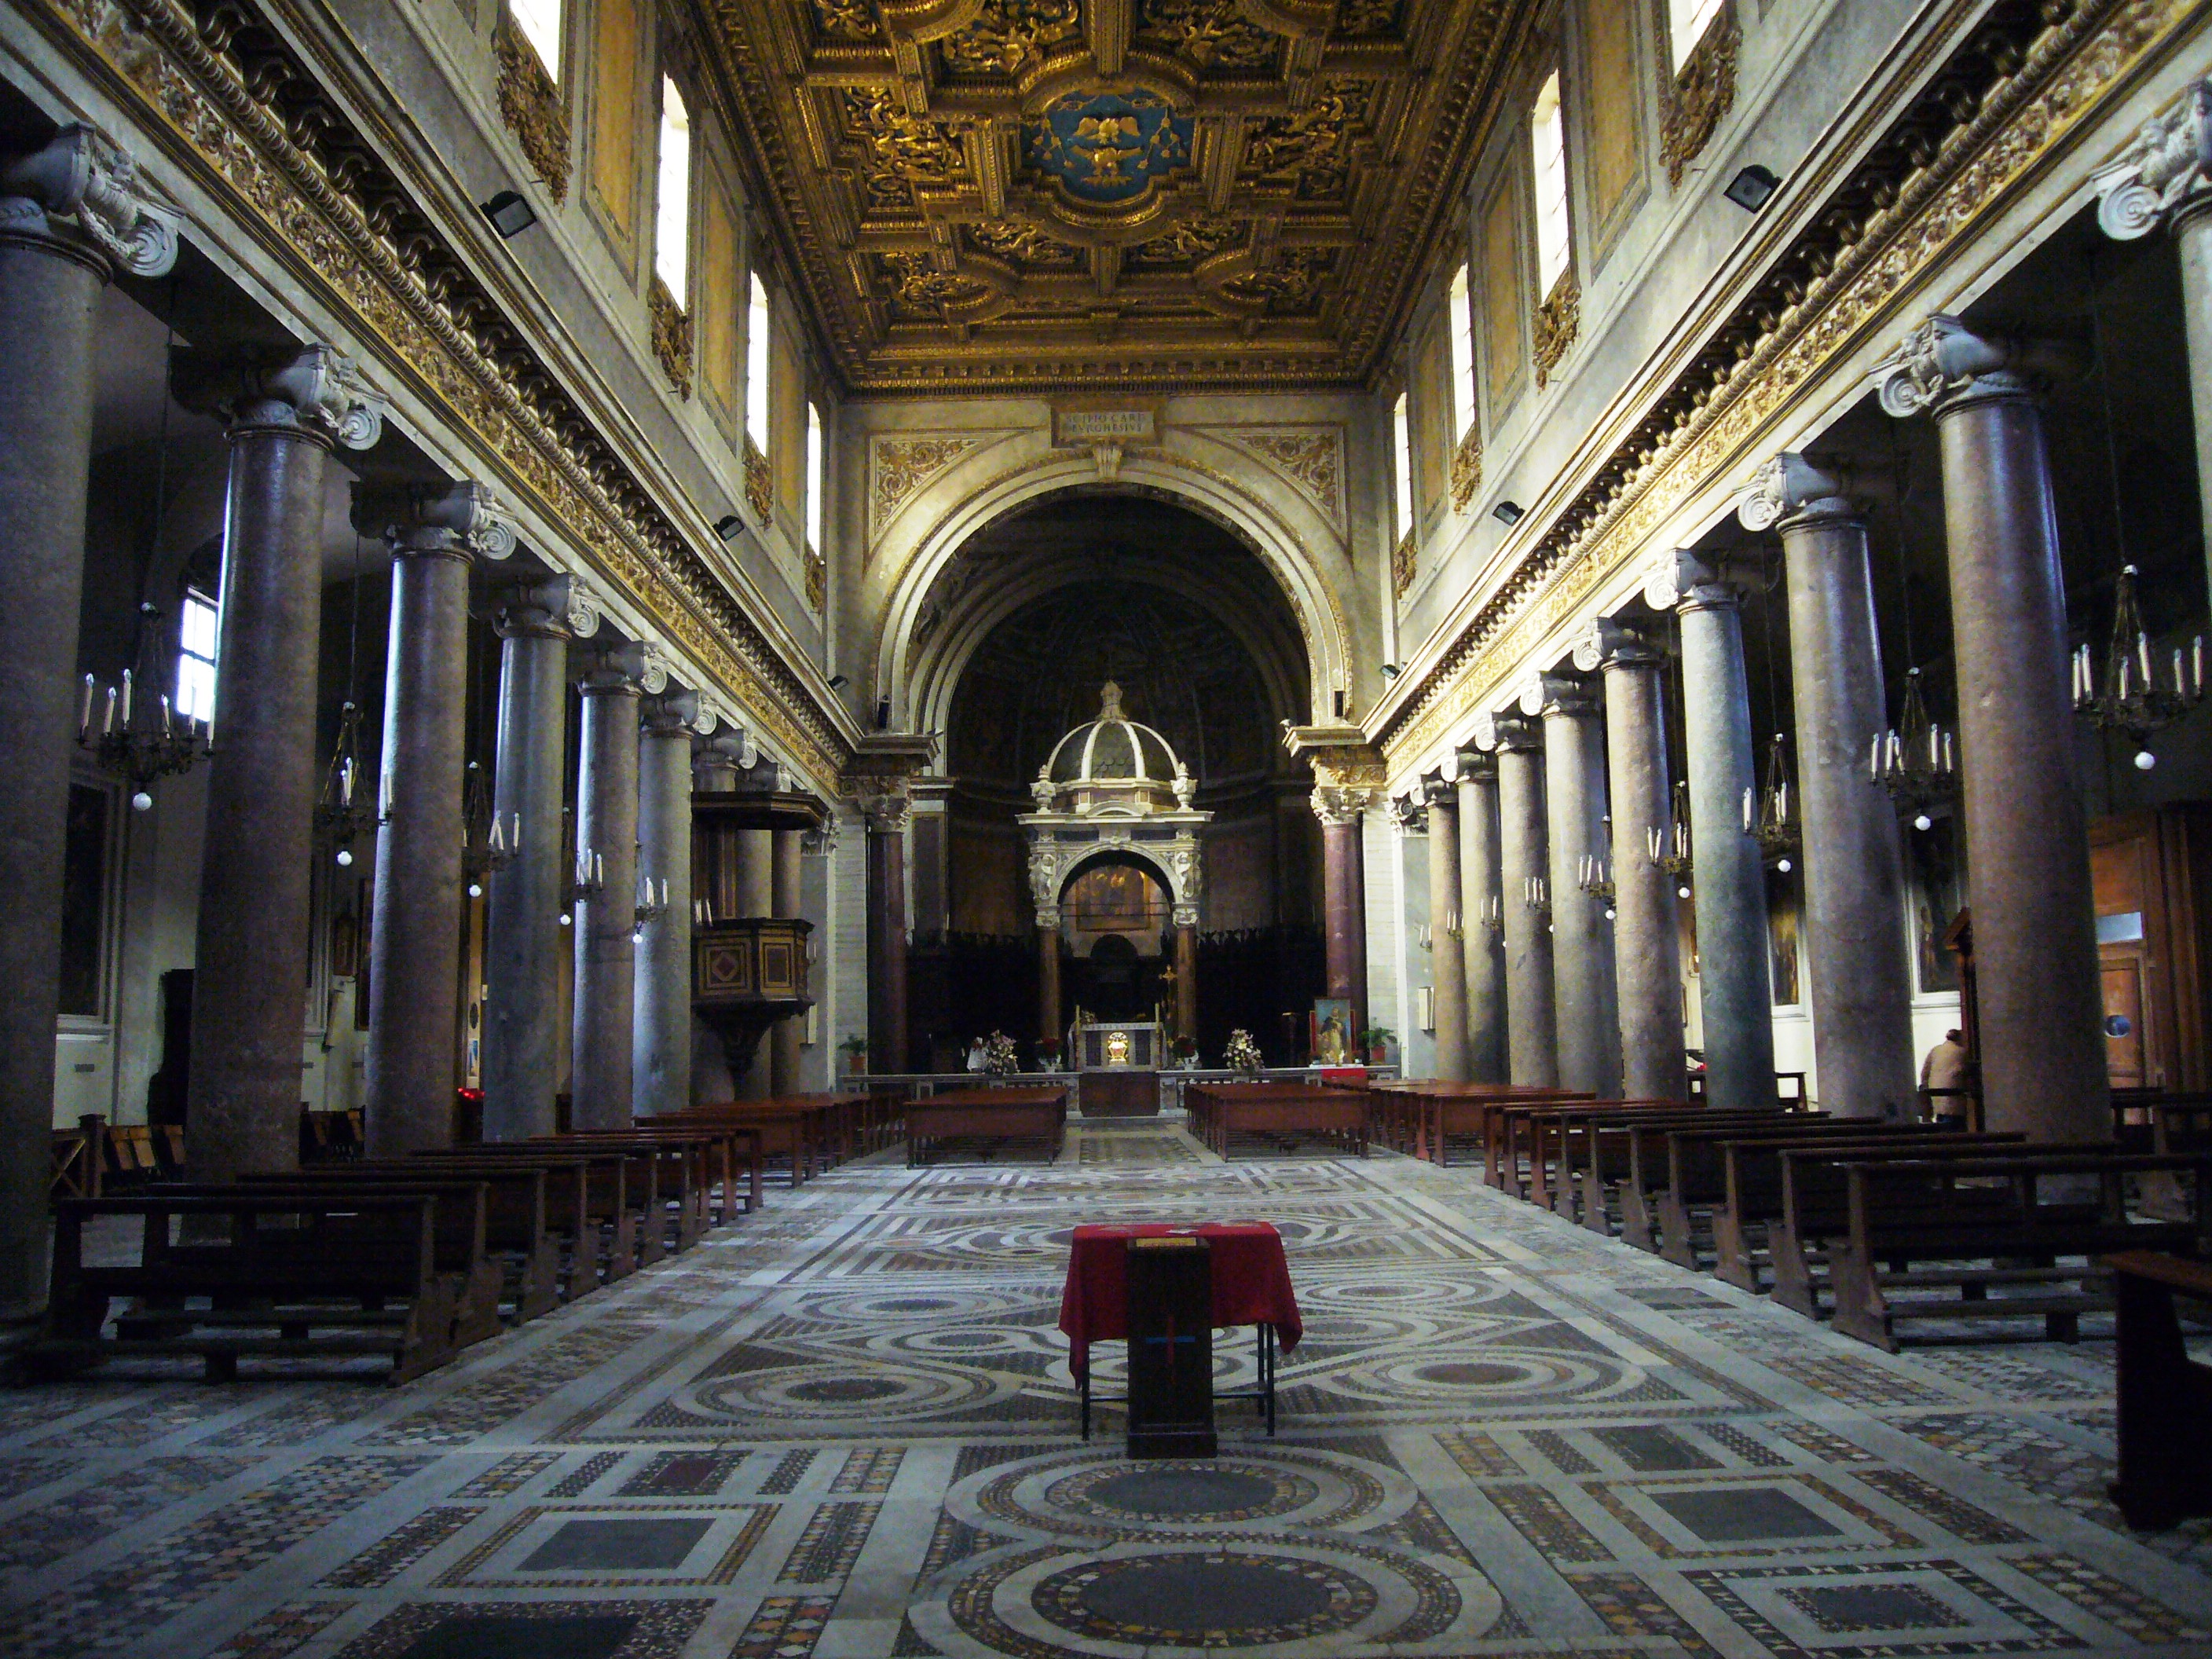 St. Crisogono's basilica